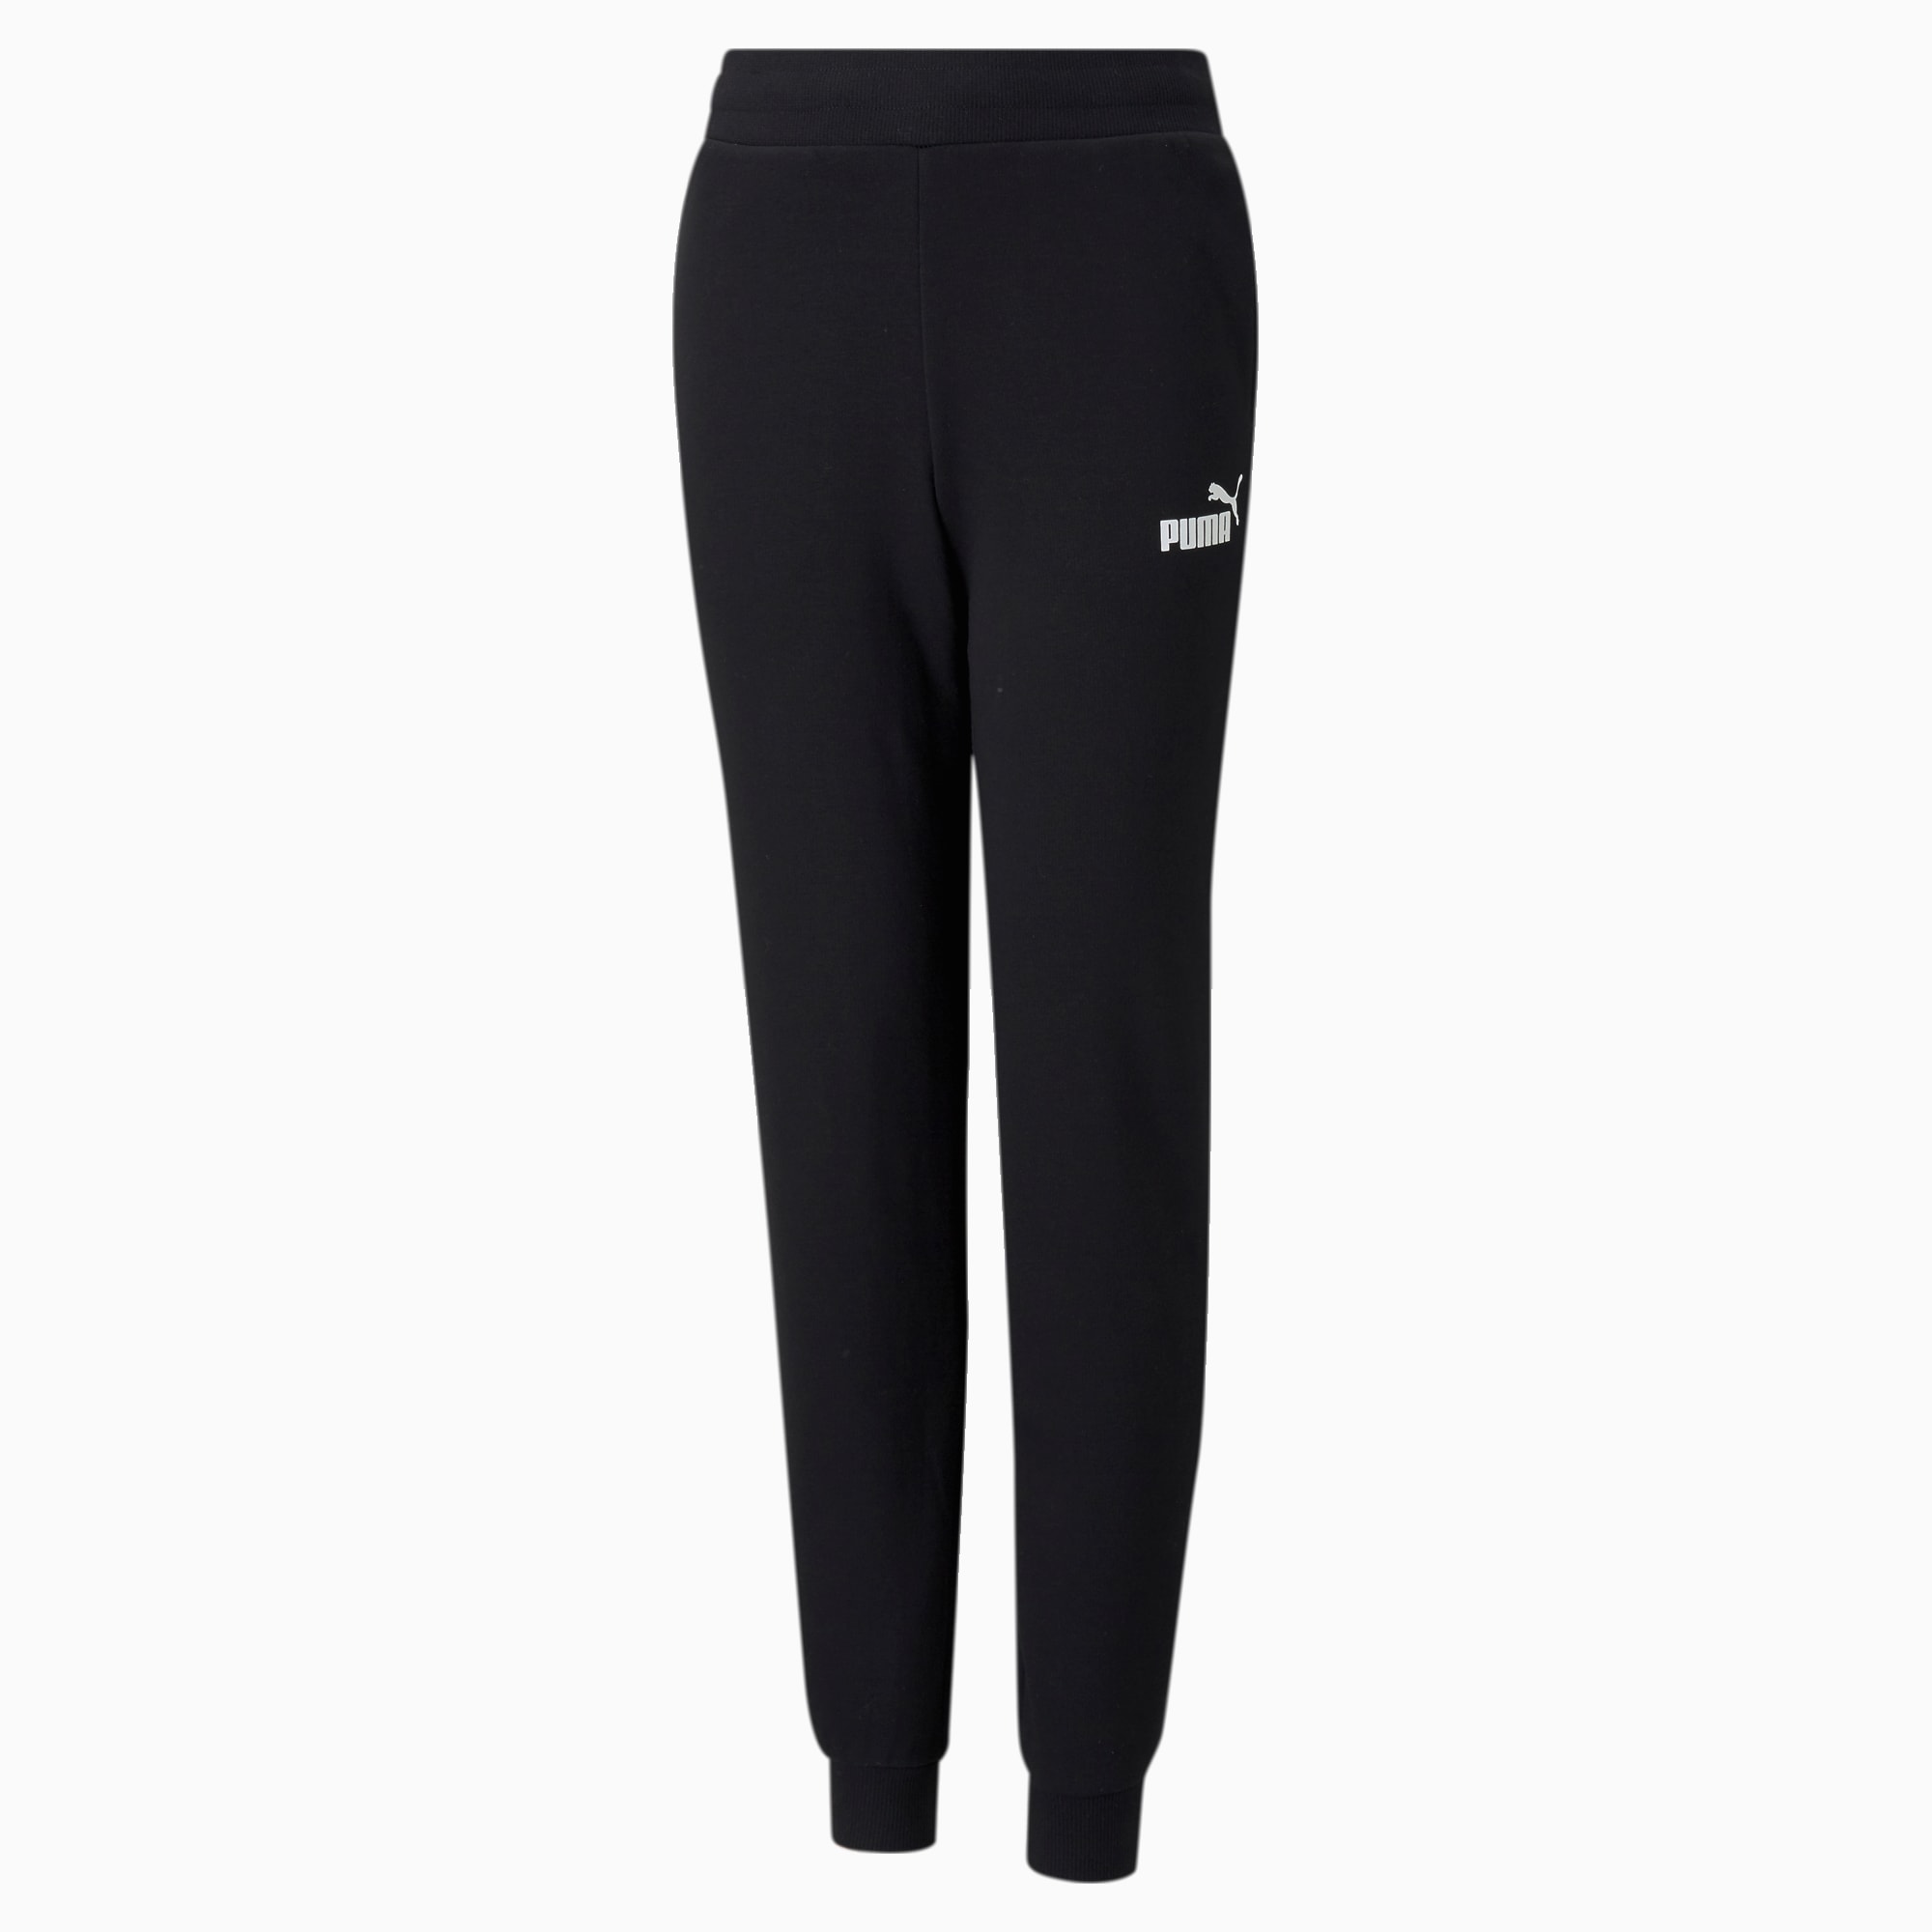 PUMA Essentials Youth Sweatpants, Black, Size 104, Clothing